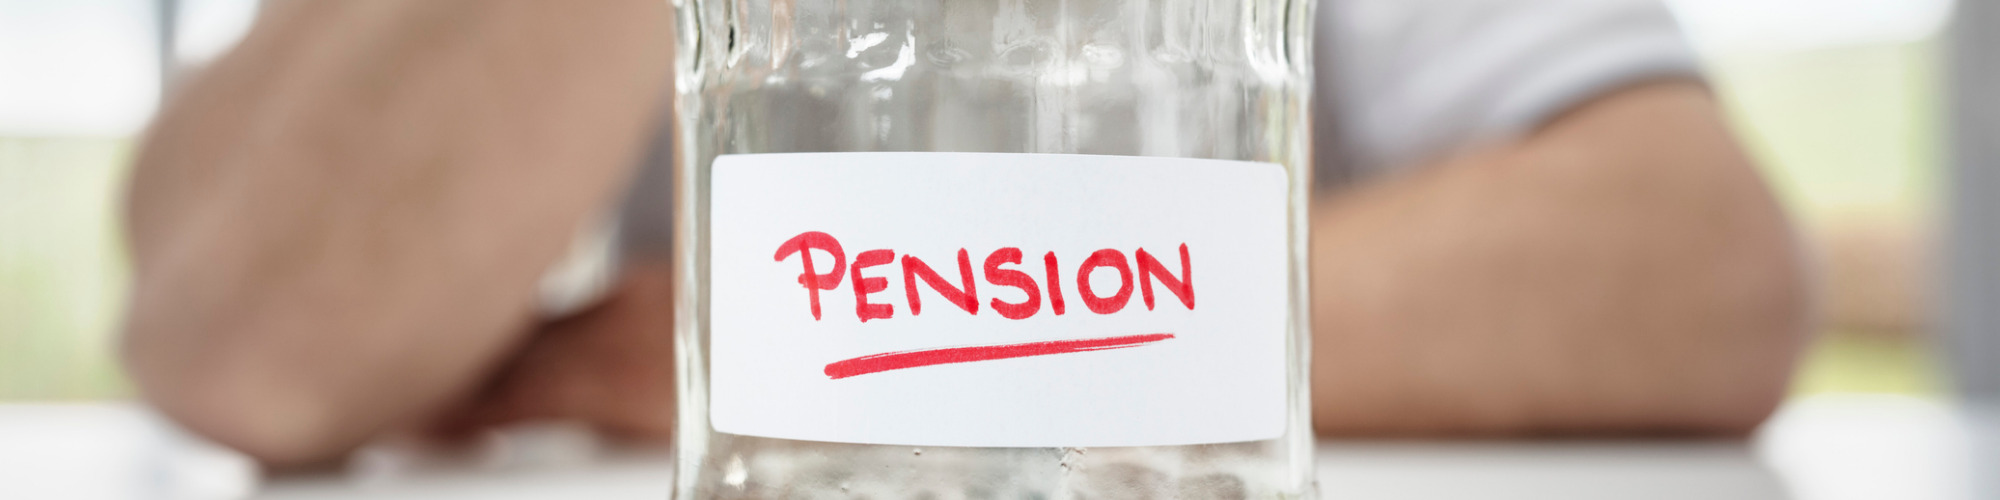 Handling Pension Disputes - Reducing Time & Cost